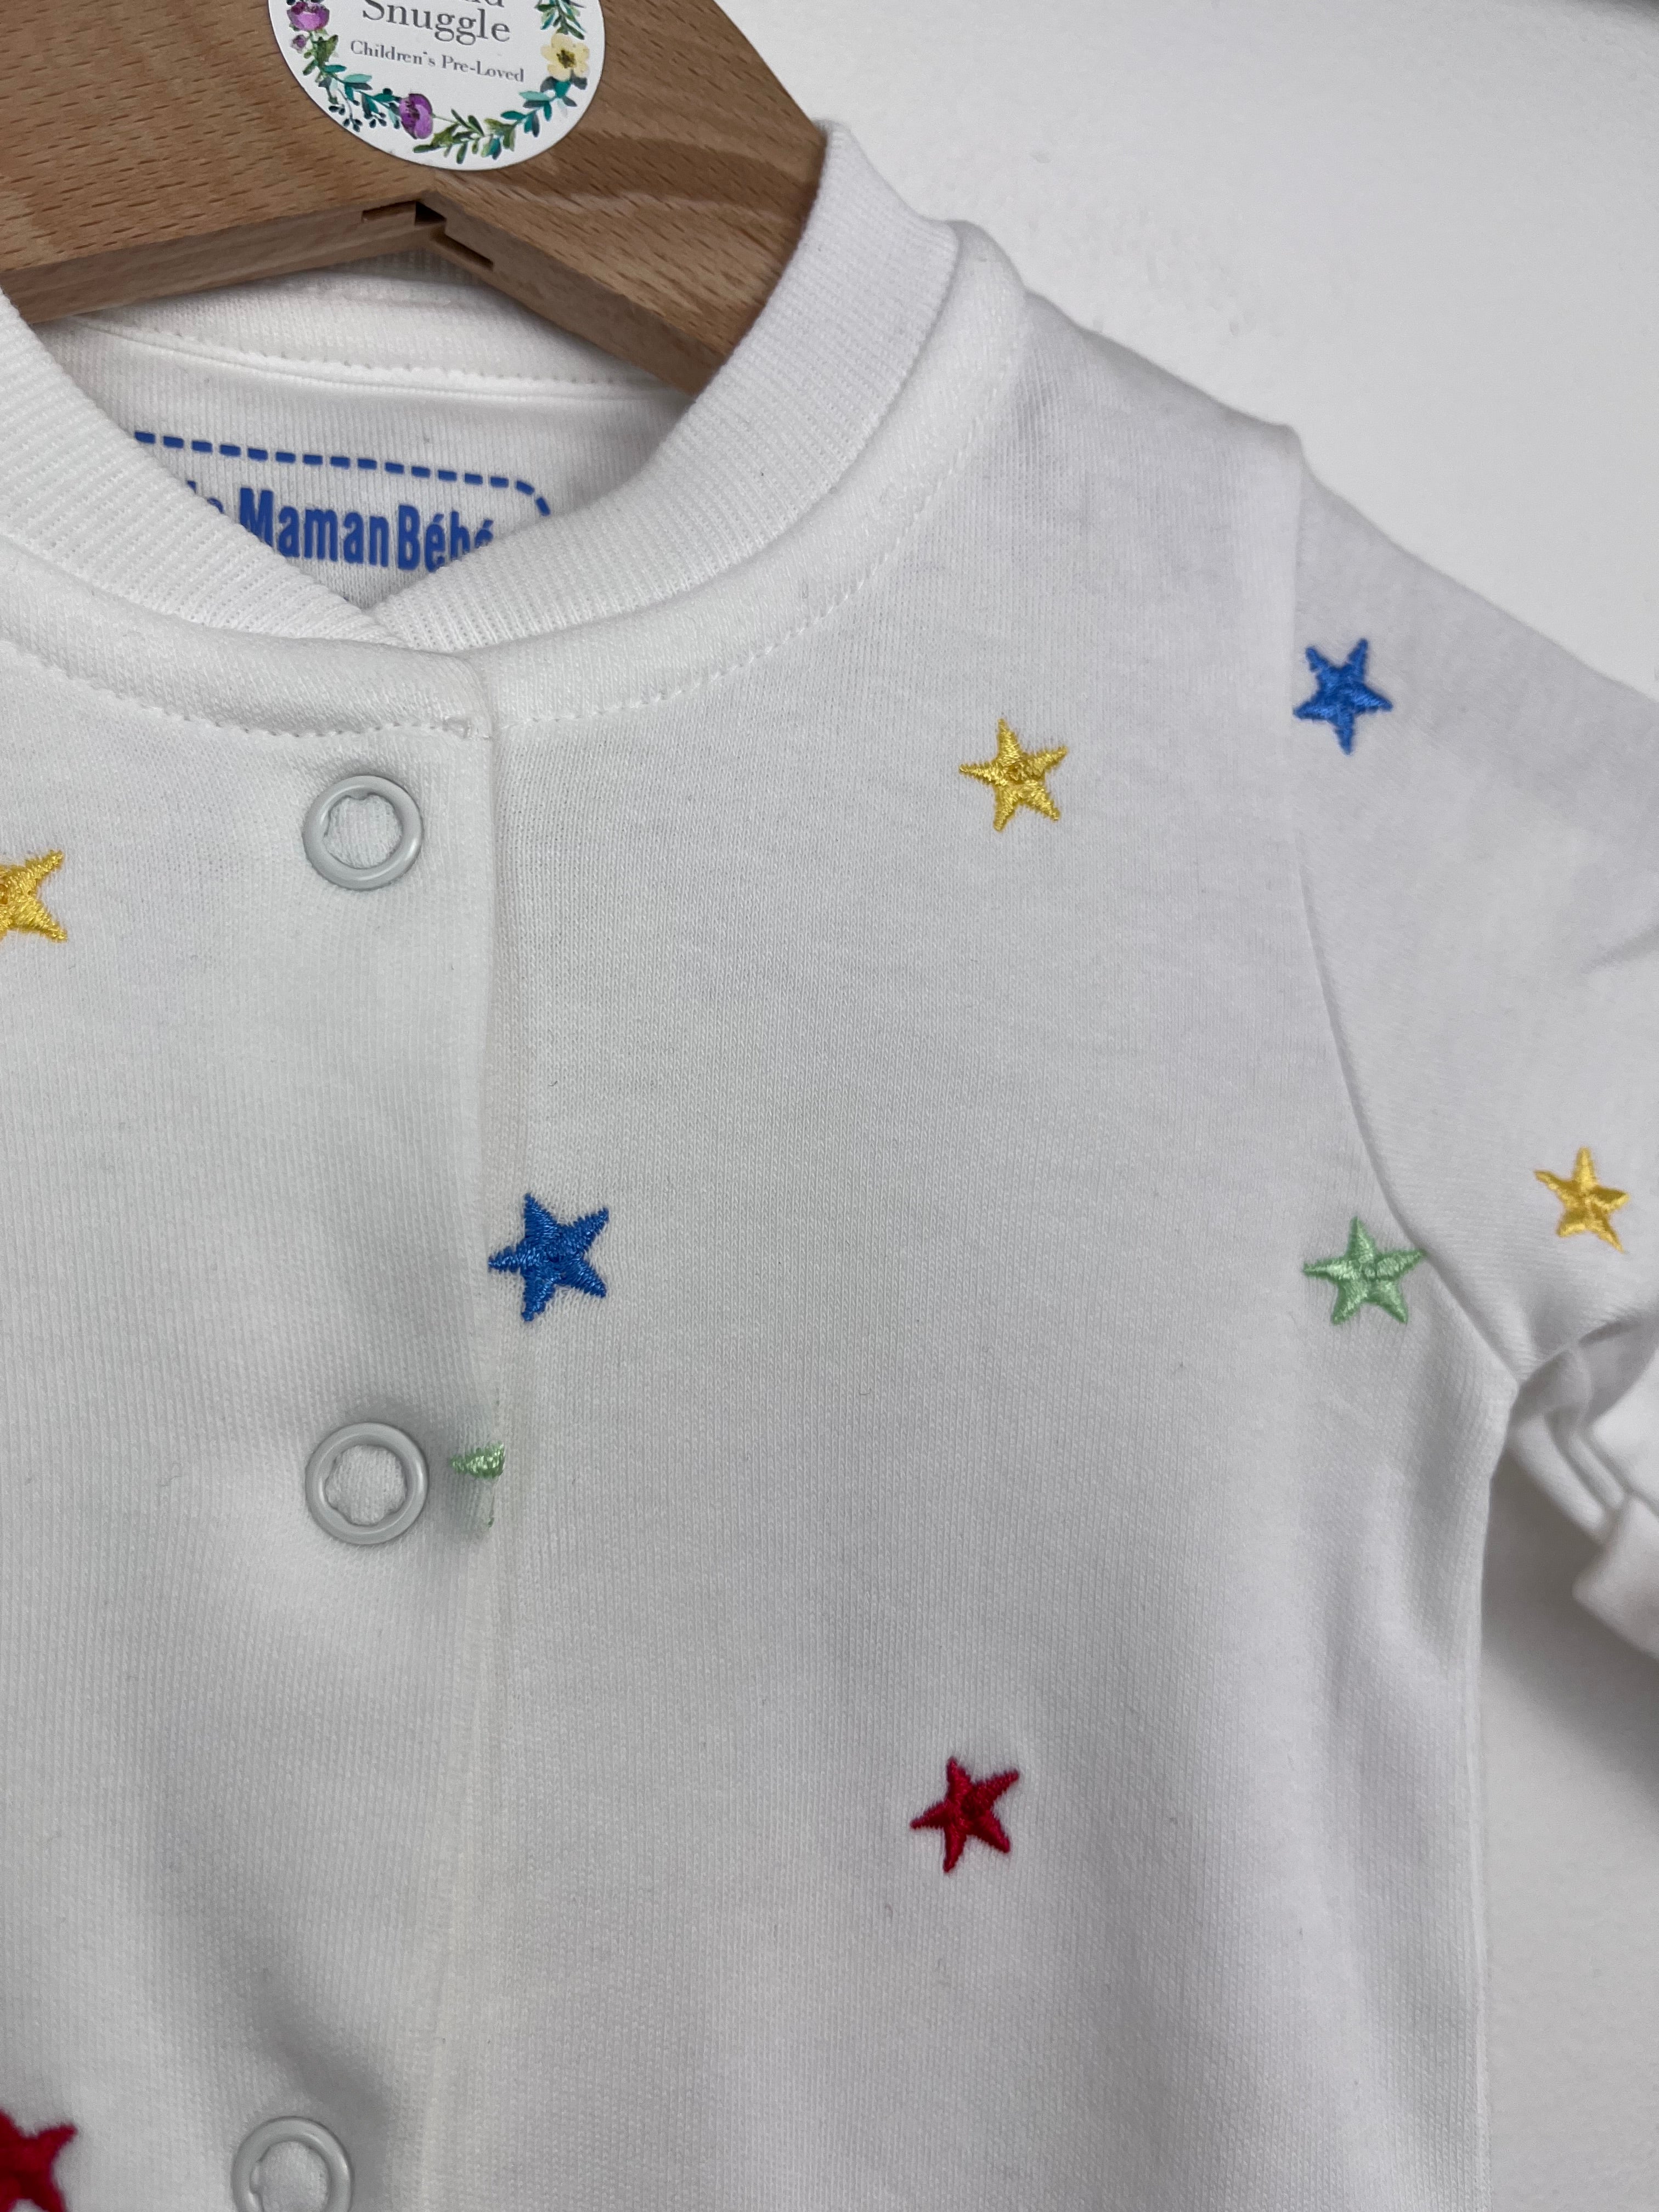 JoJo Maman Bebe Tiny Baby-Sleepsuits-Second Snuggle Preloved